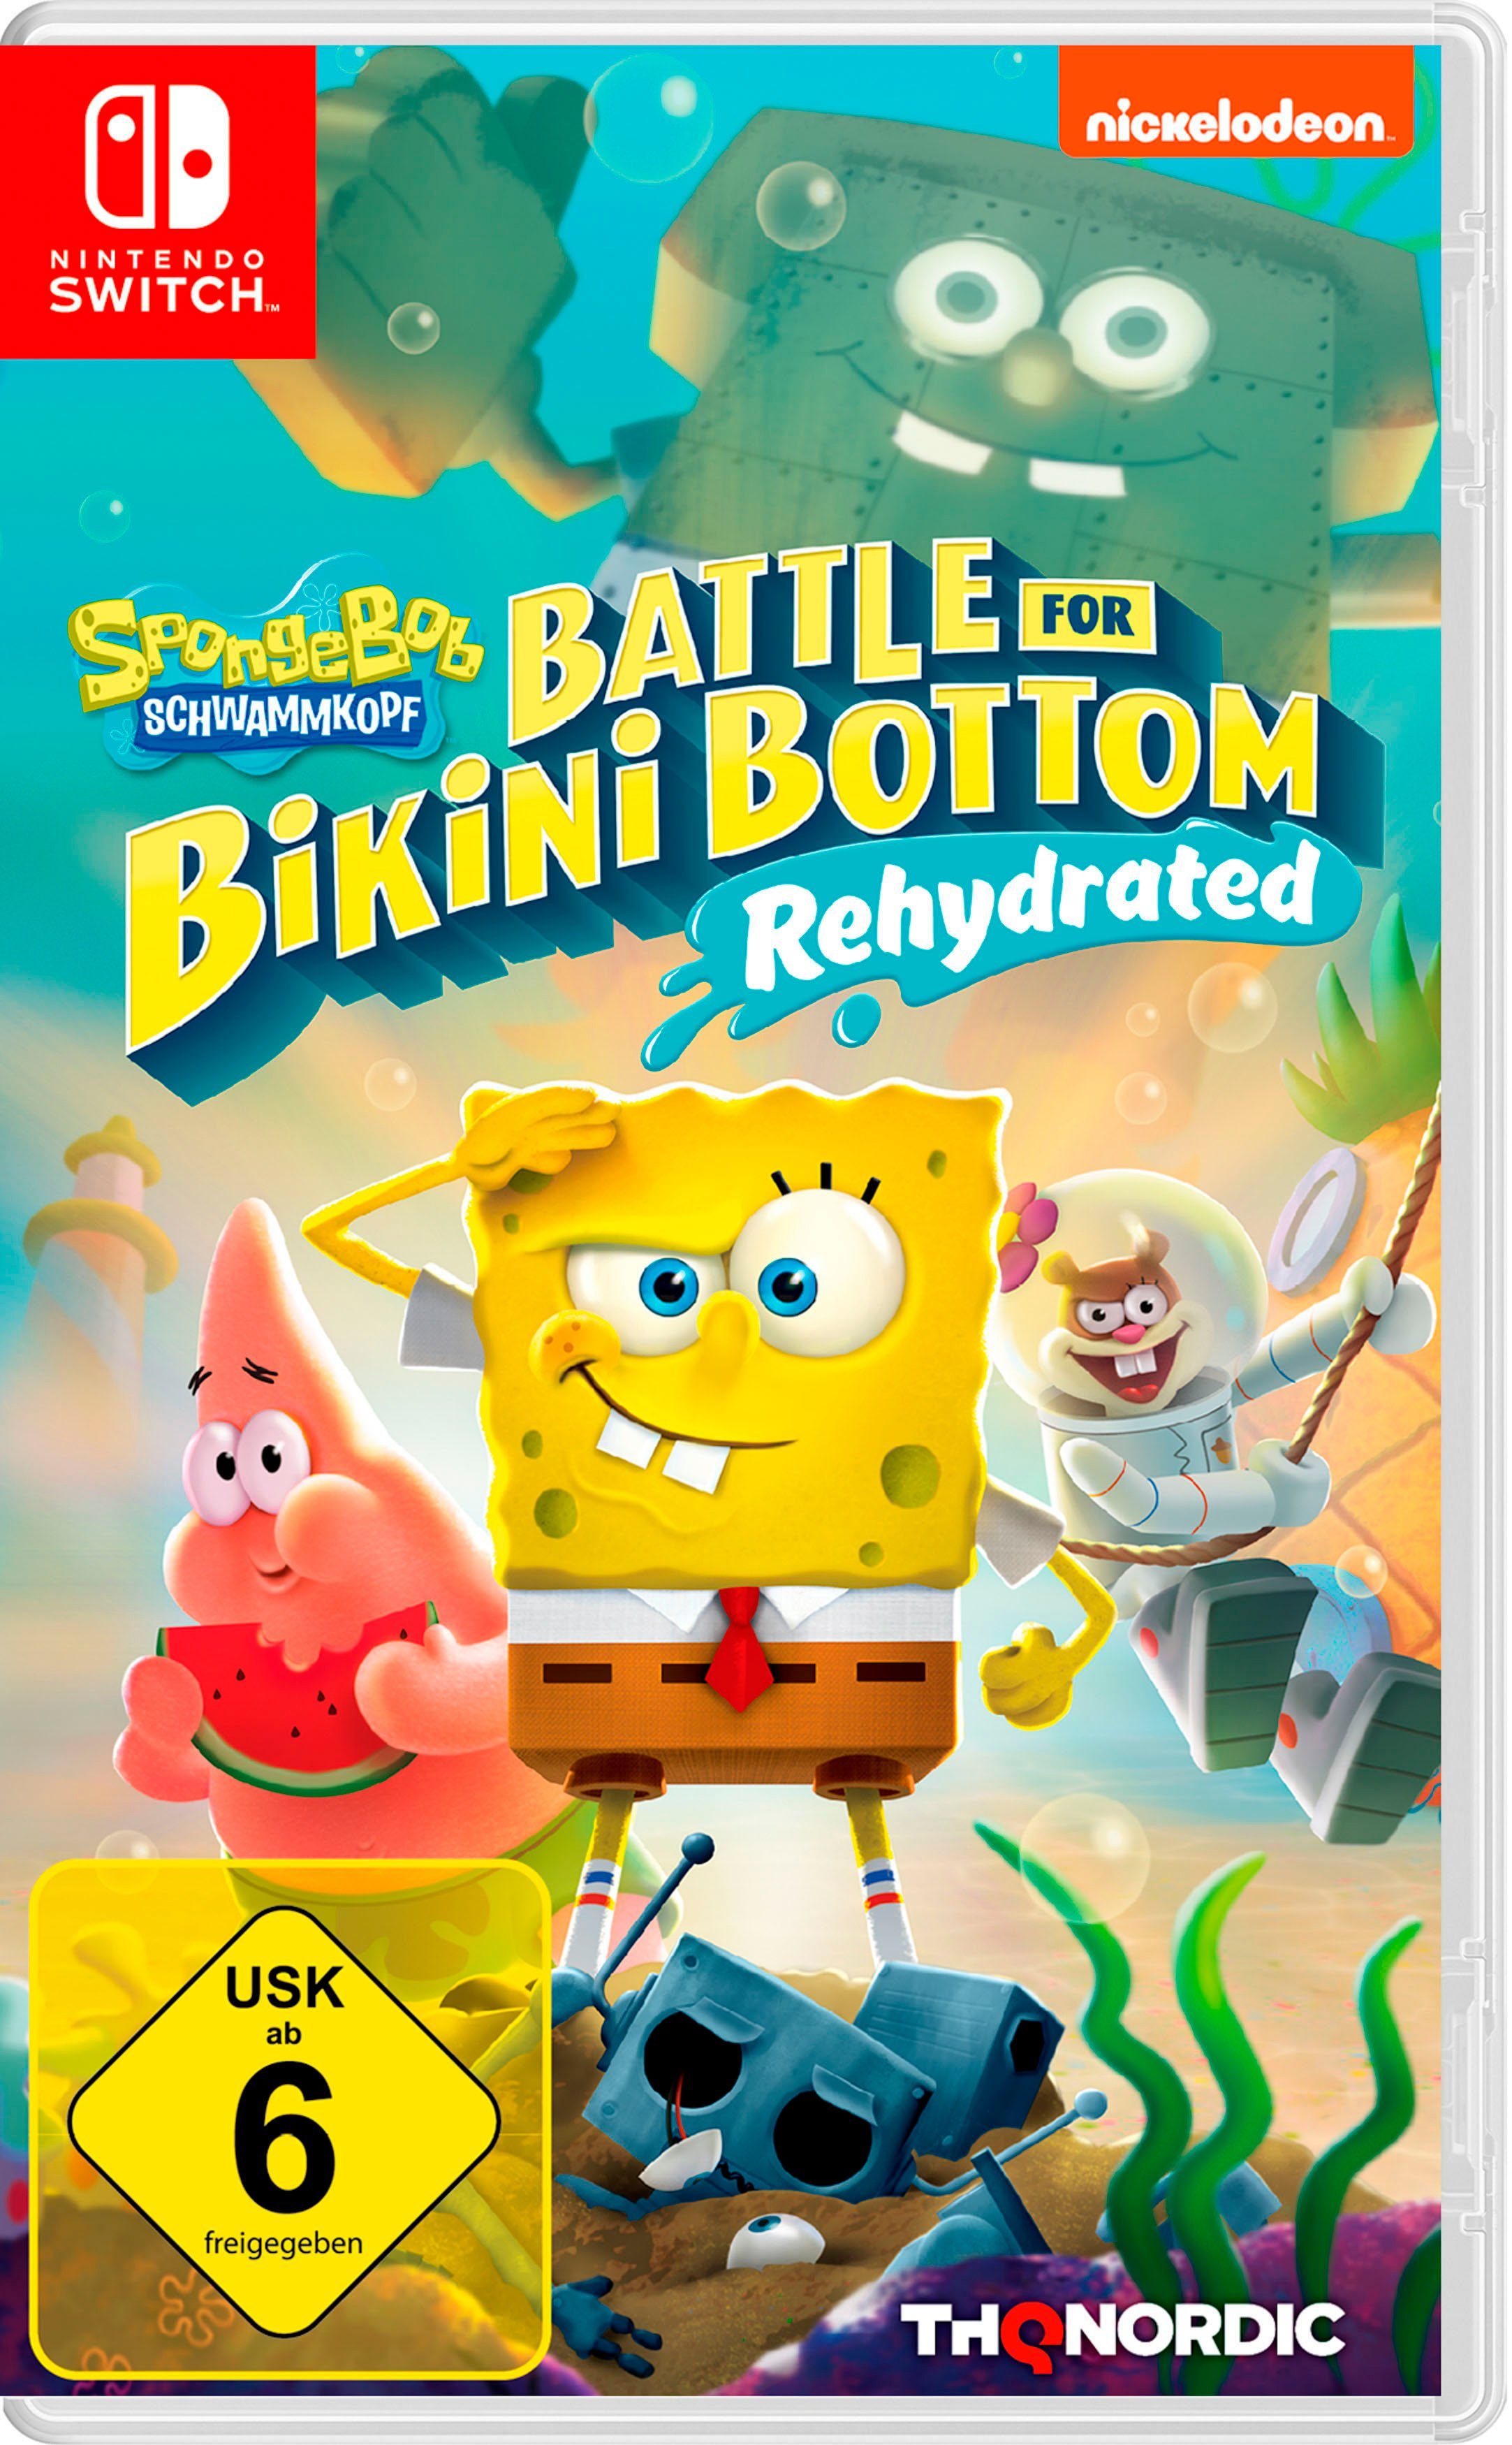 For Spongebob Schwammkopf: Switch Rehydrated Battle Switch Nordic Nintendo THQ Bikini Bottom -